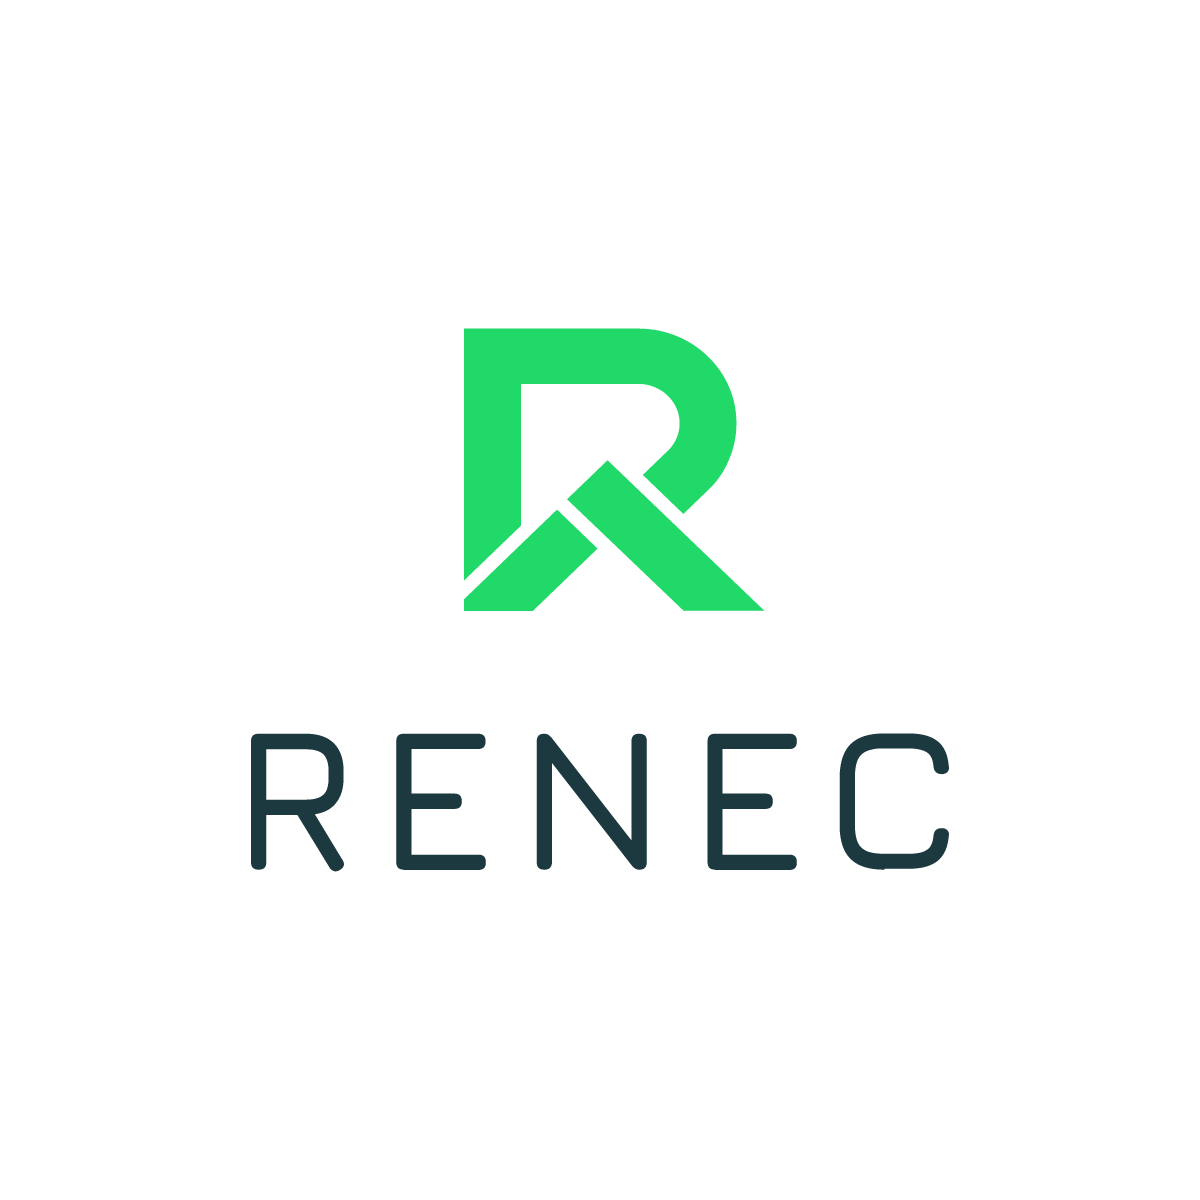 RENEC Blockchain image